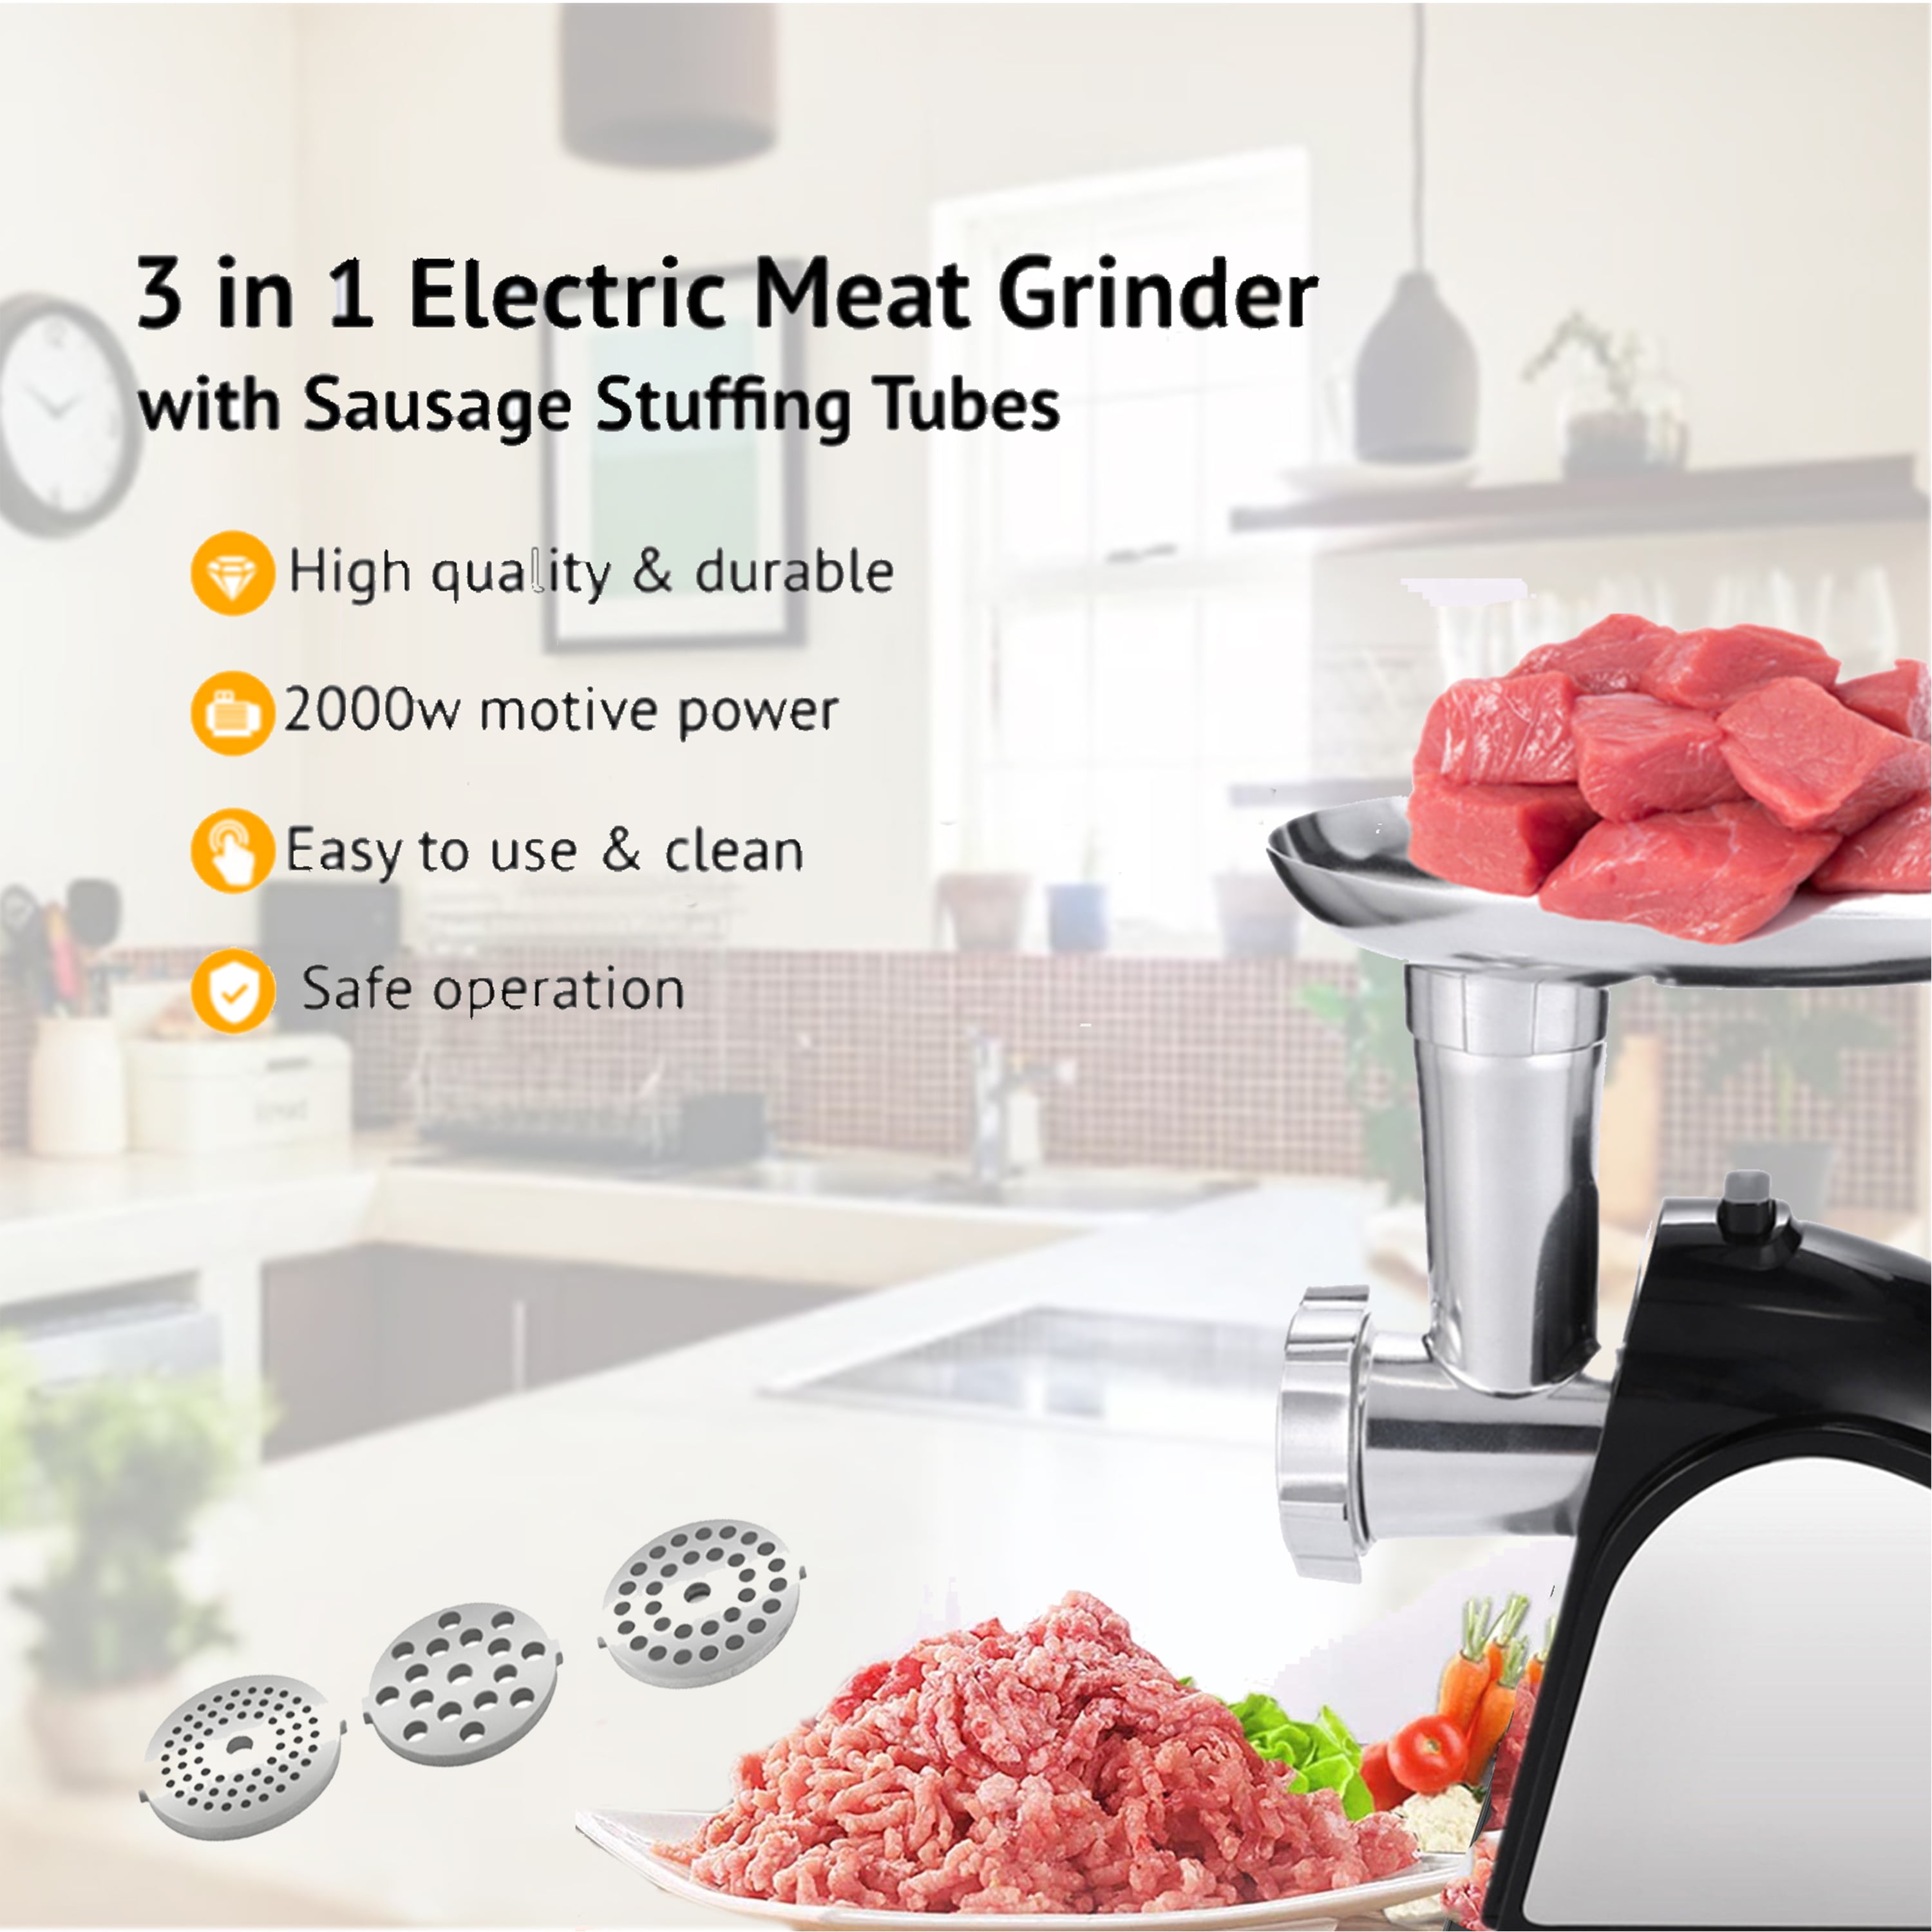 LINKChef Meat Grinder, 2 Adjustable Speed 2400W Max Electric Meat Grinders  for Home use, Sausage Stuffer, ETL Approved(Black) 